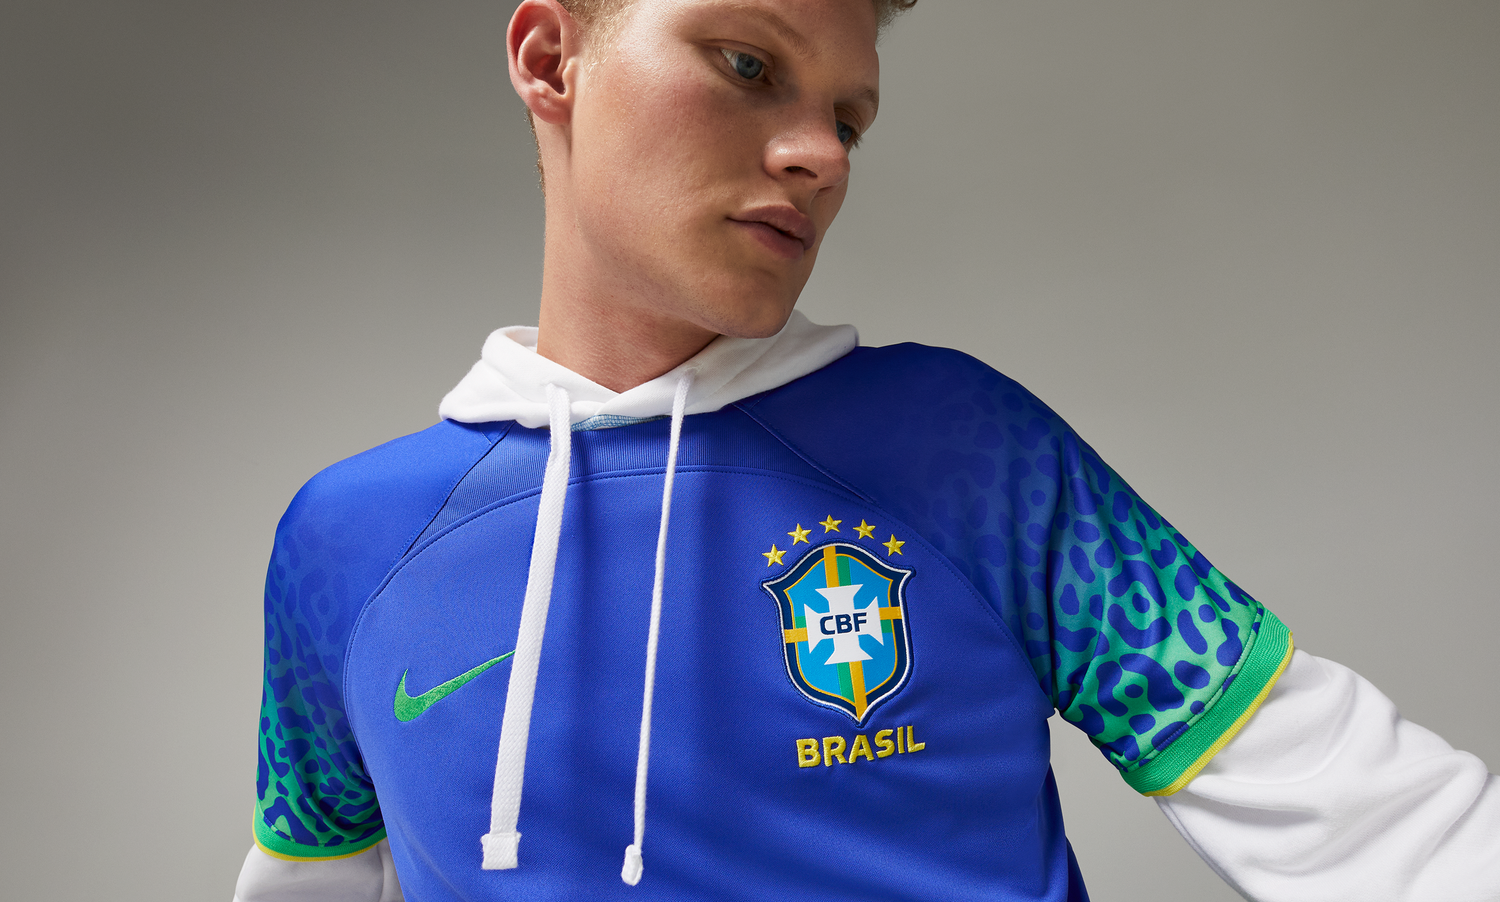 Nike Football World Cup 23 Brazil Stadium away jersey in blue